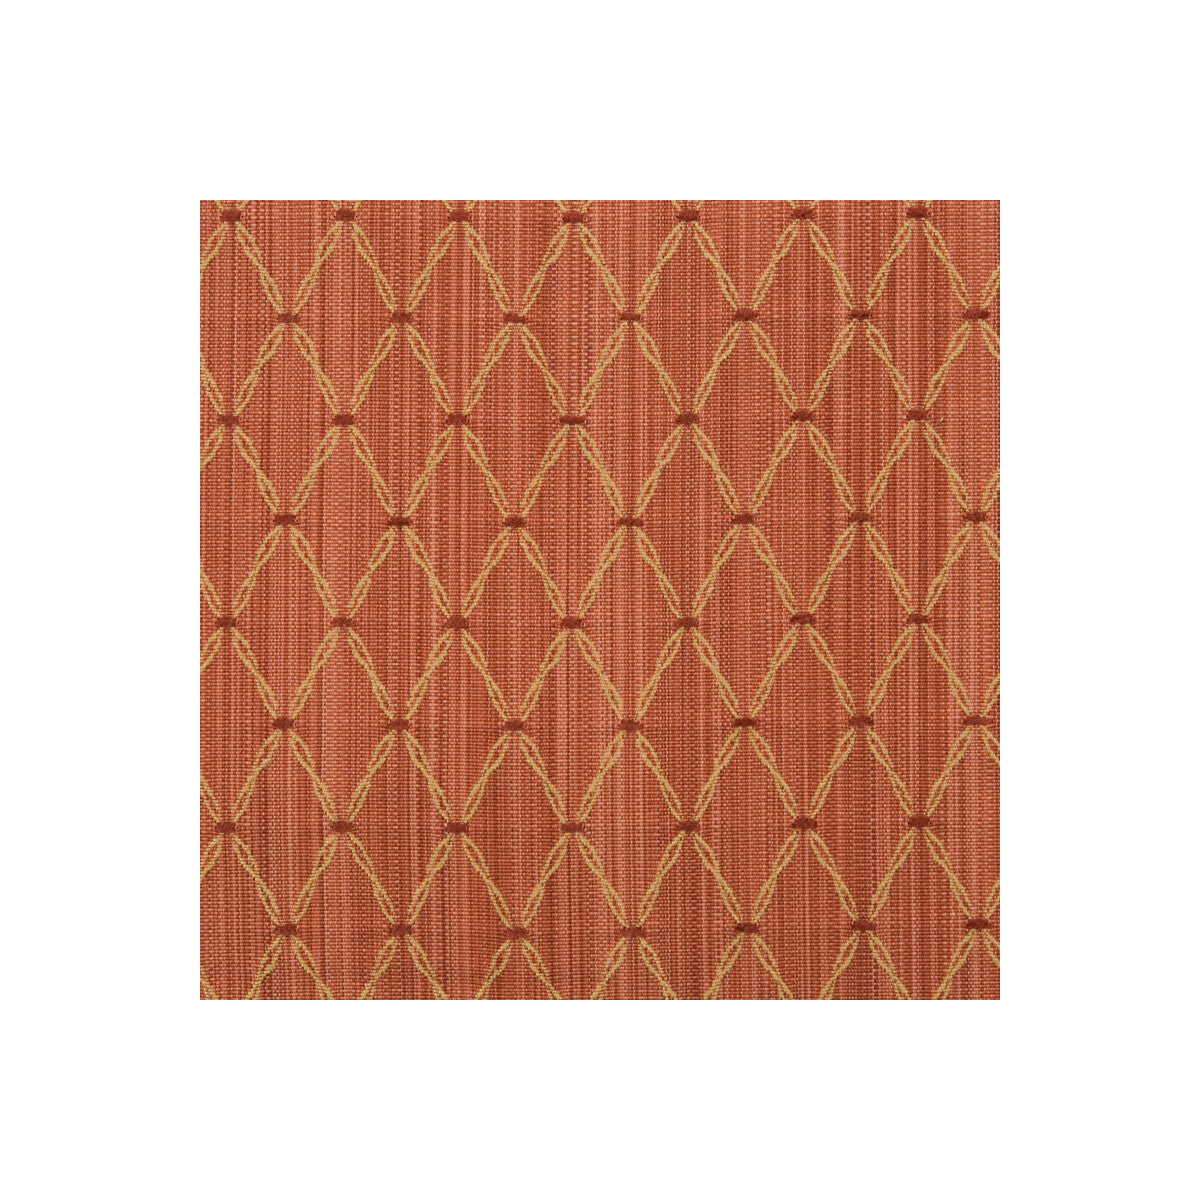 Link fabric in copper color - pattern 23218.24.0 - by Kravet Smart